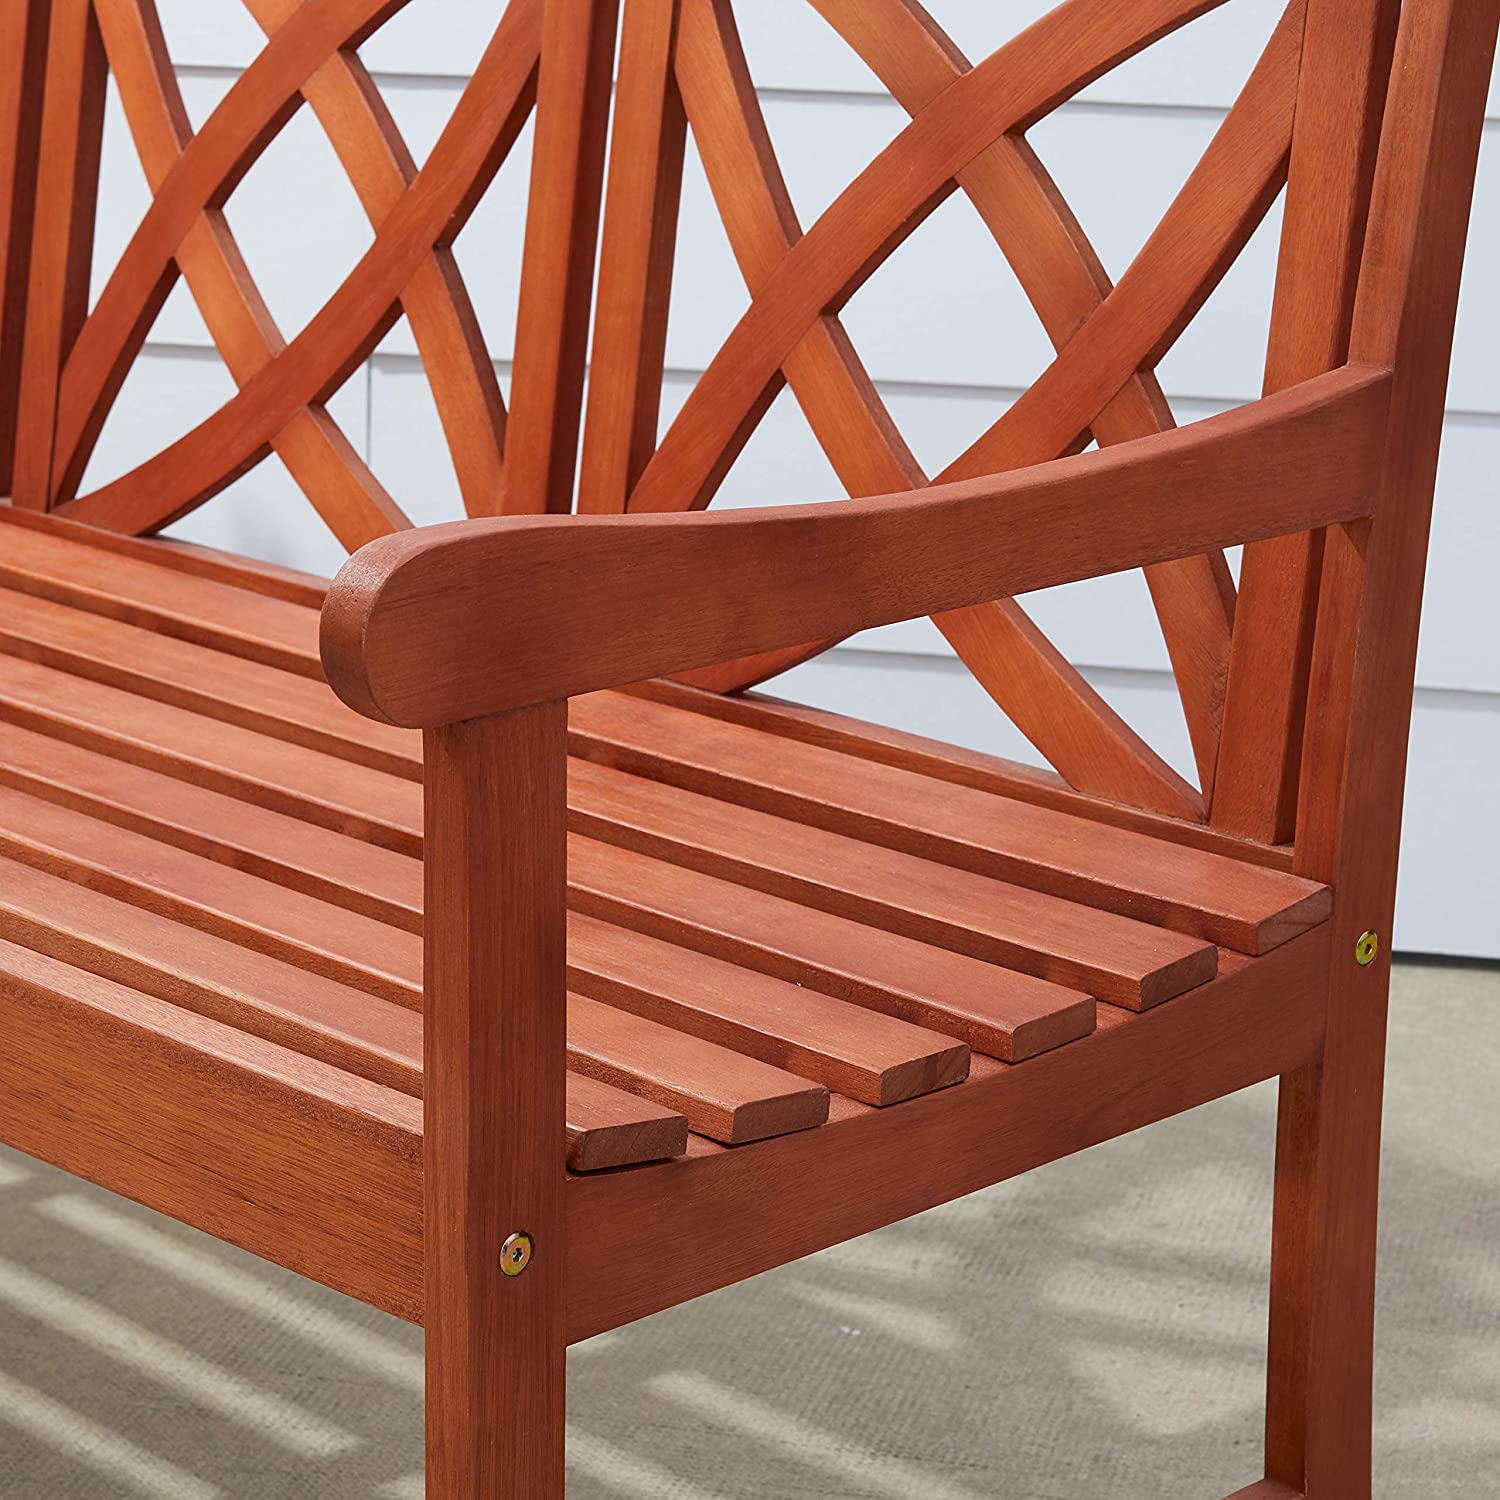 Vifah Malibu Outdoor PatioWood Garden Bench - Reddish Brown & Oil-Rubbed - Senior.com Outdoor Benches